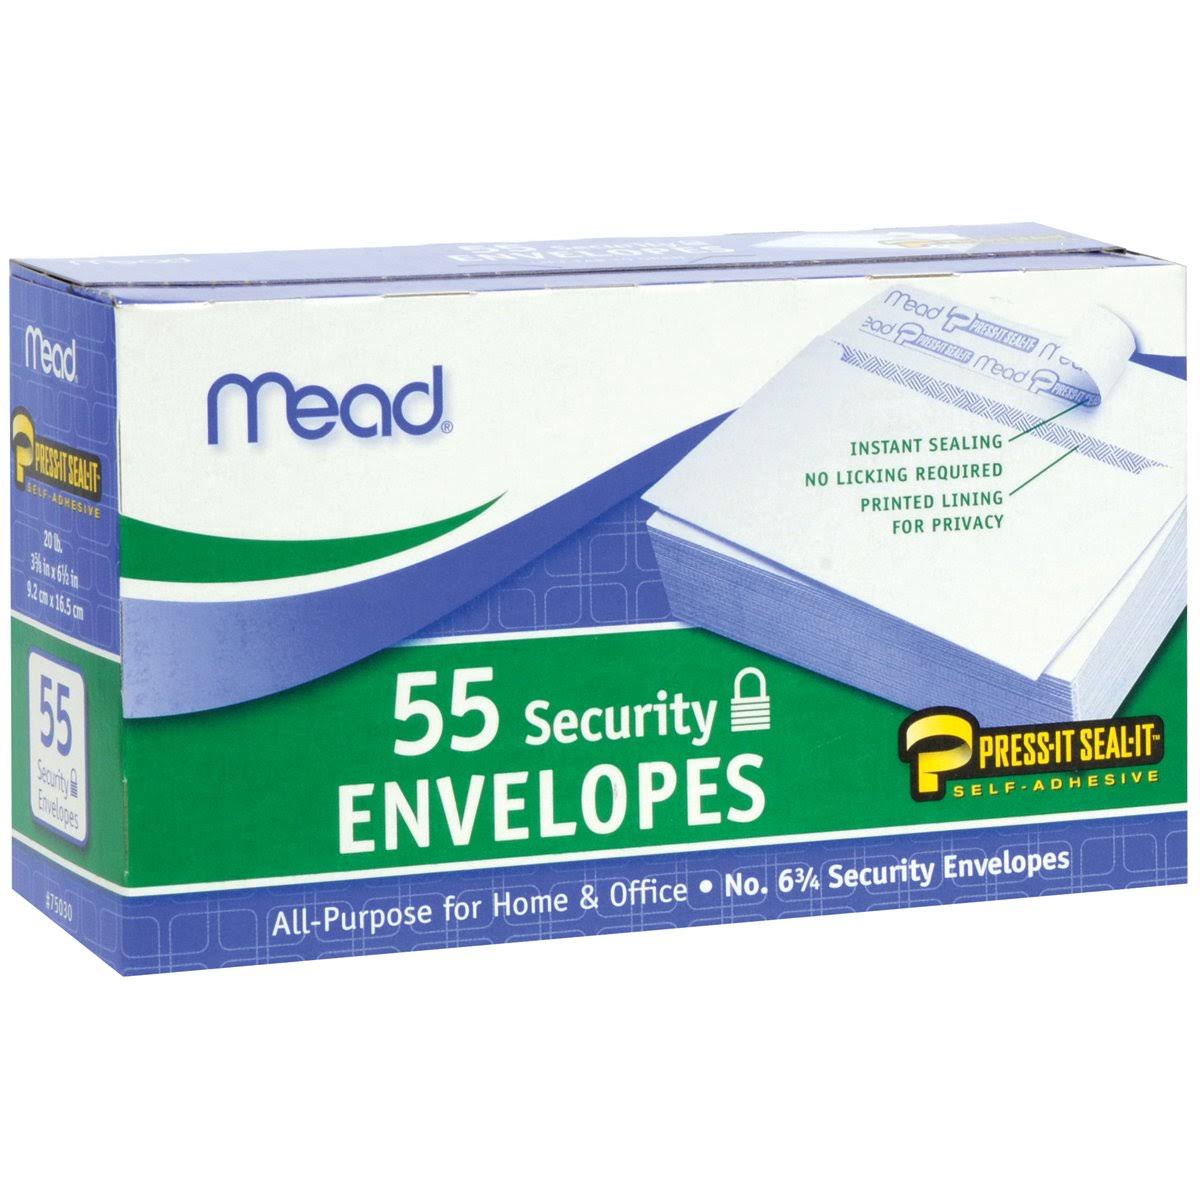 Mead Press-it Seal-it Security Envelope - x55